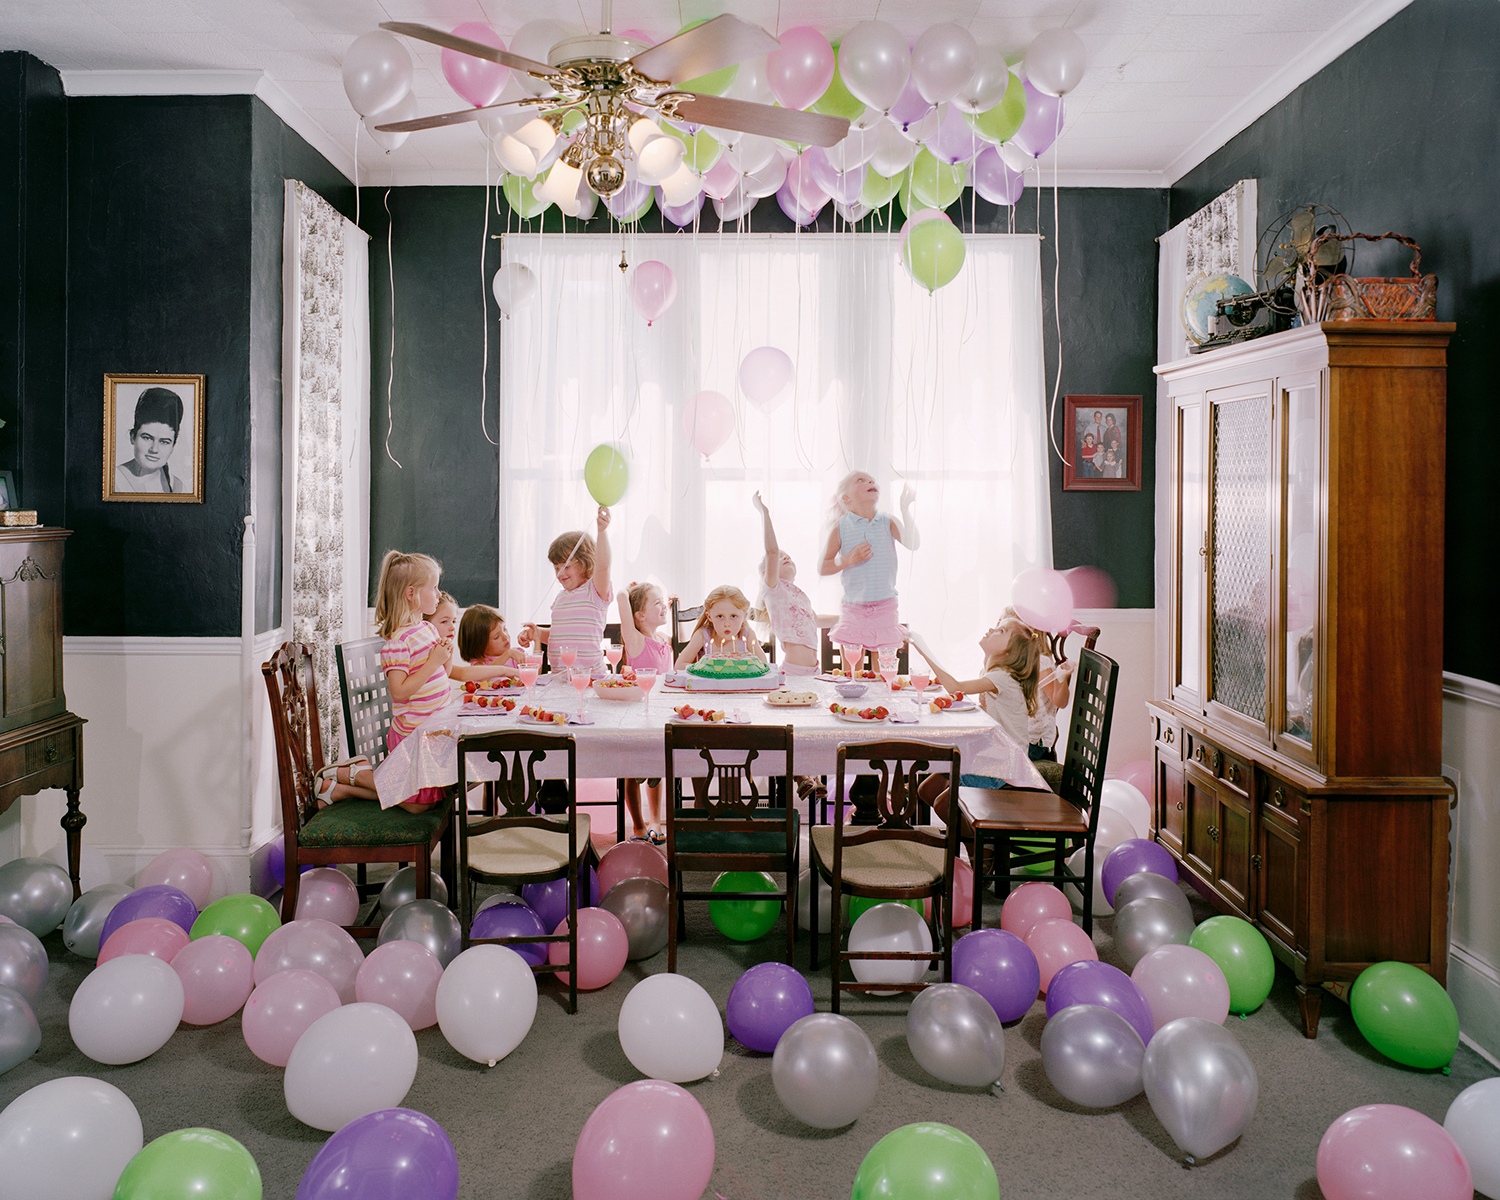  Untitled (Savannah's Birthday Party)